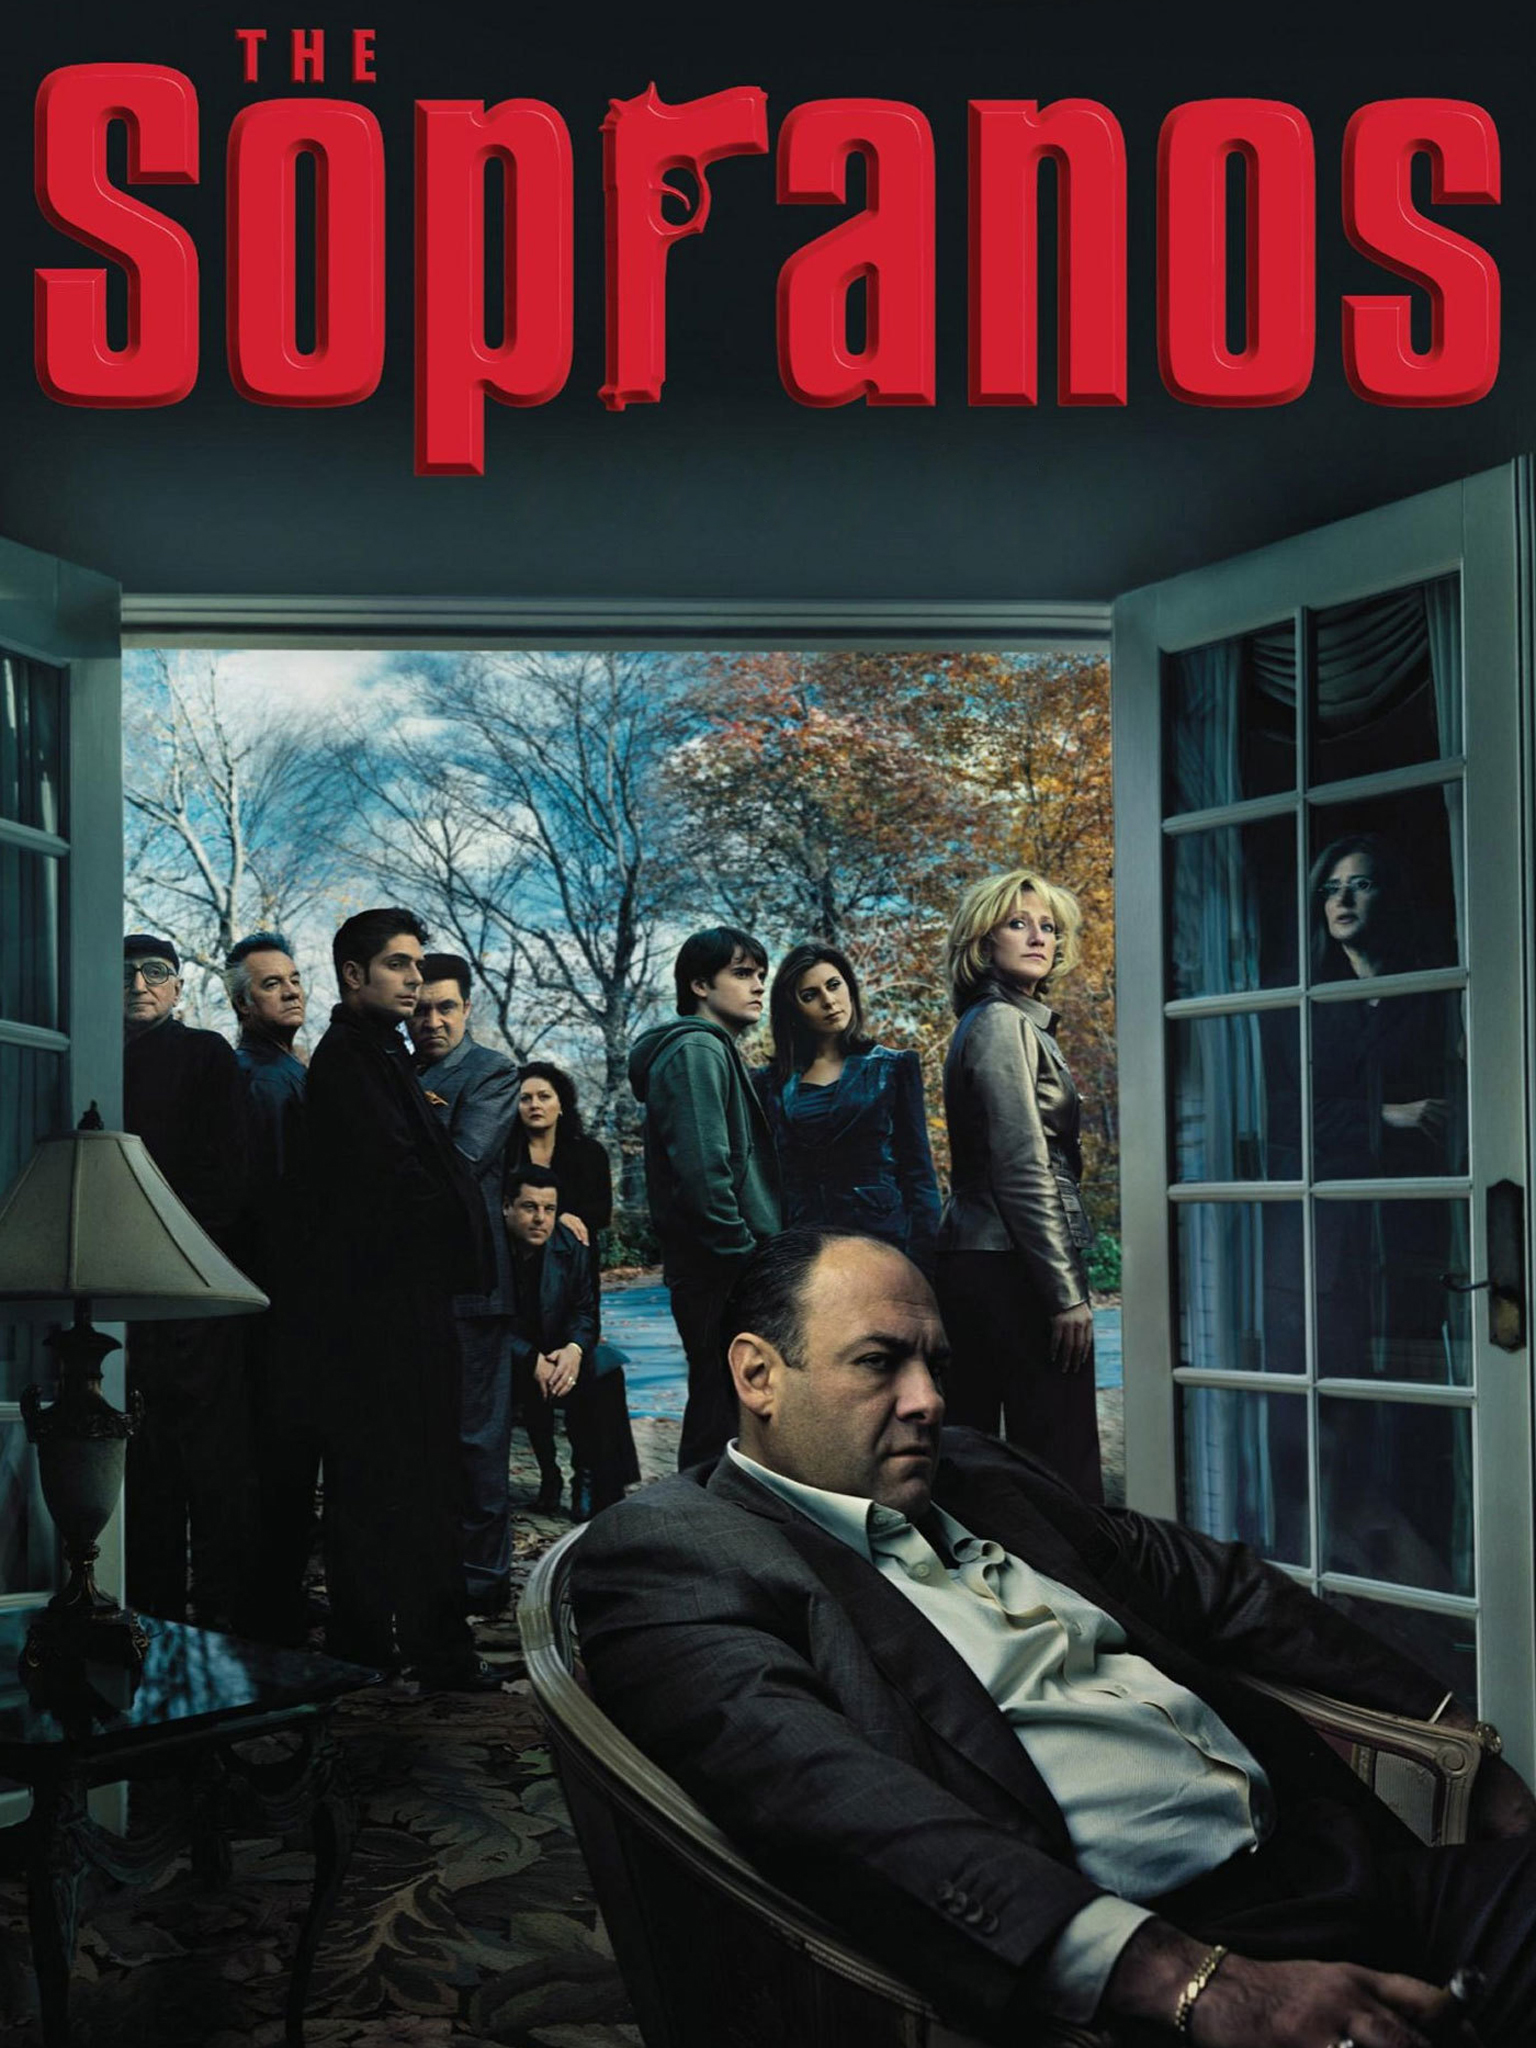 "The Sopranos"